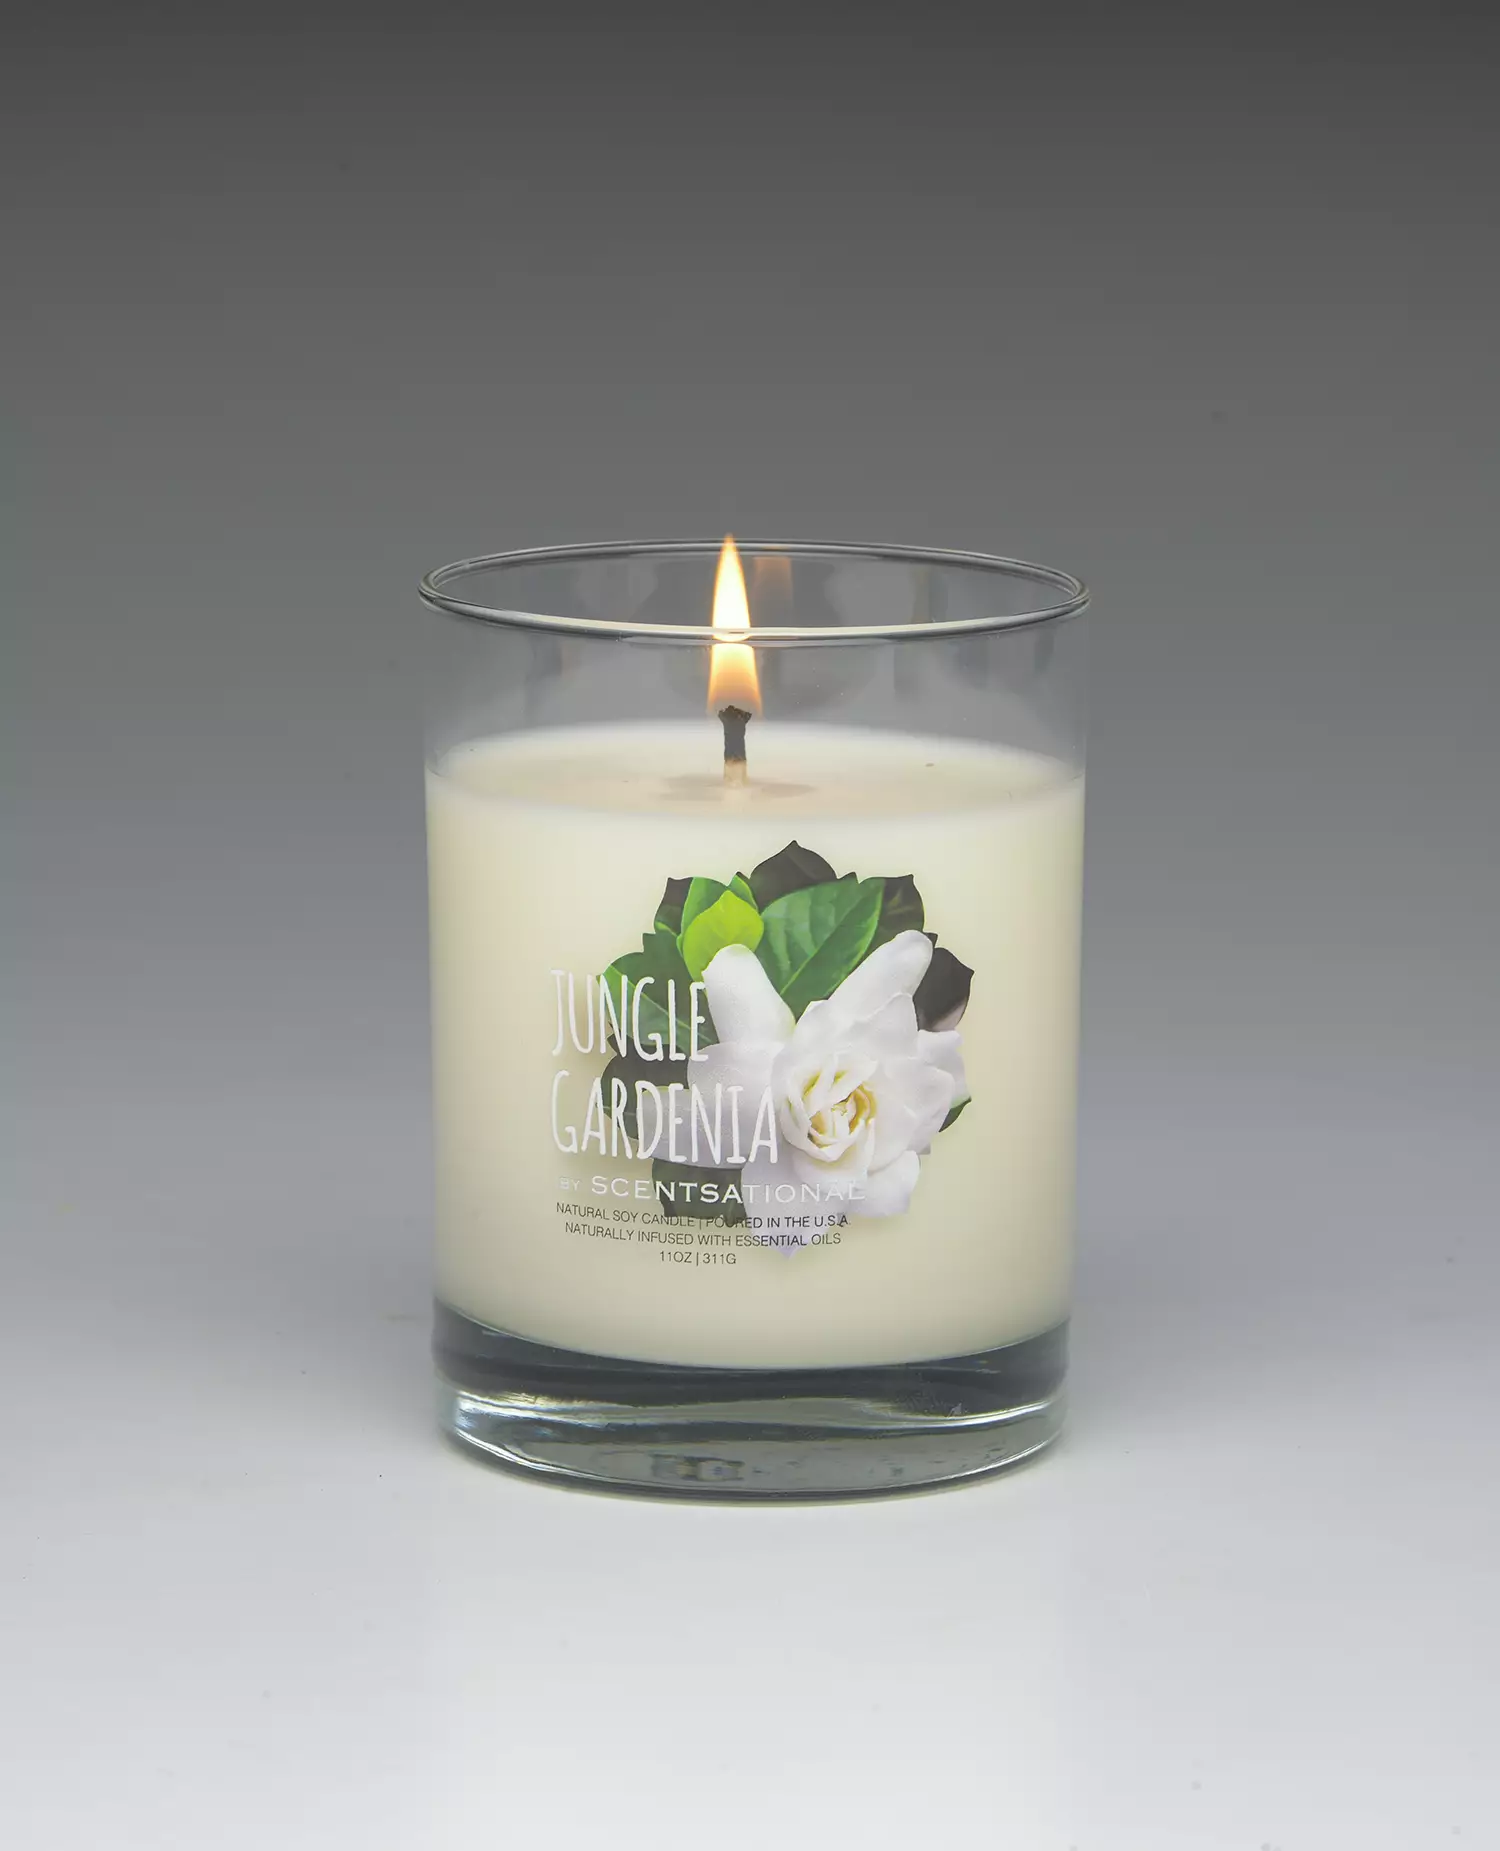 Jungle Gardenia – 11oz scented candle burning